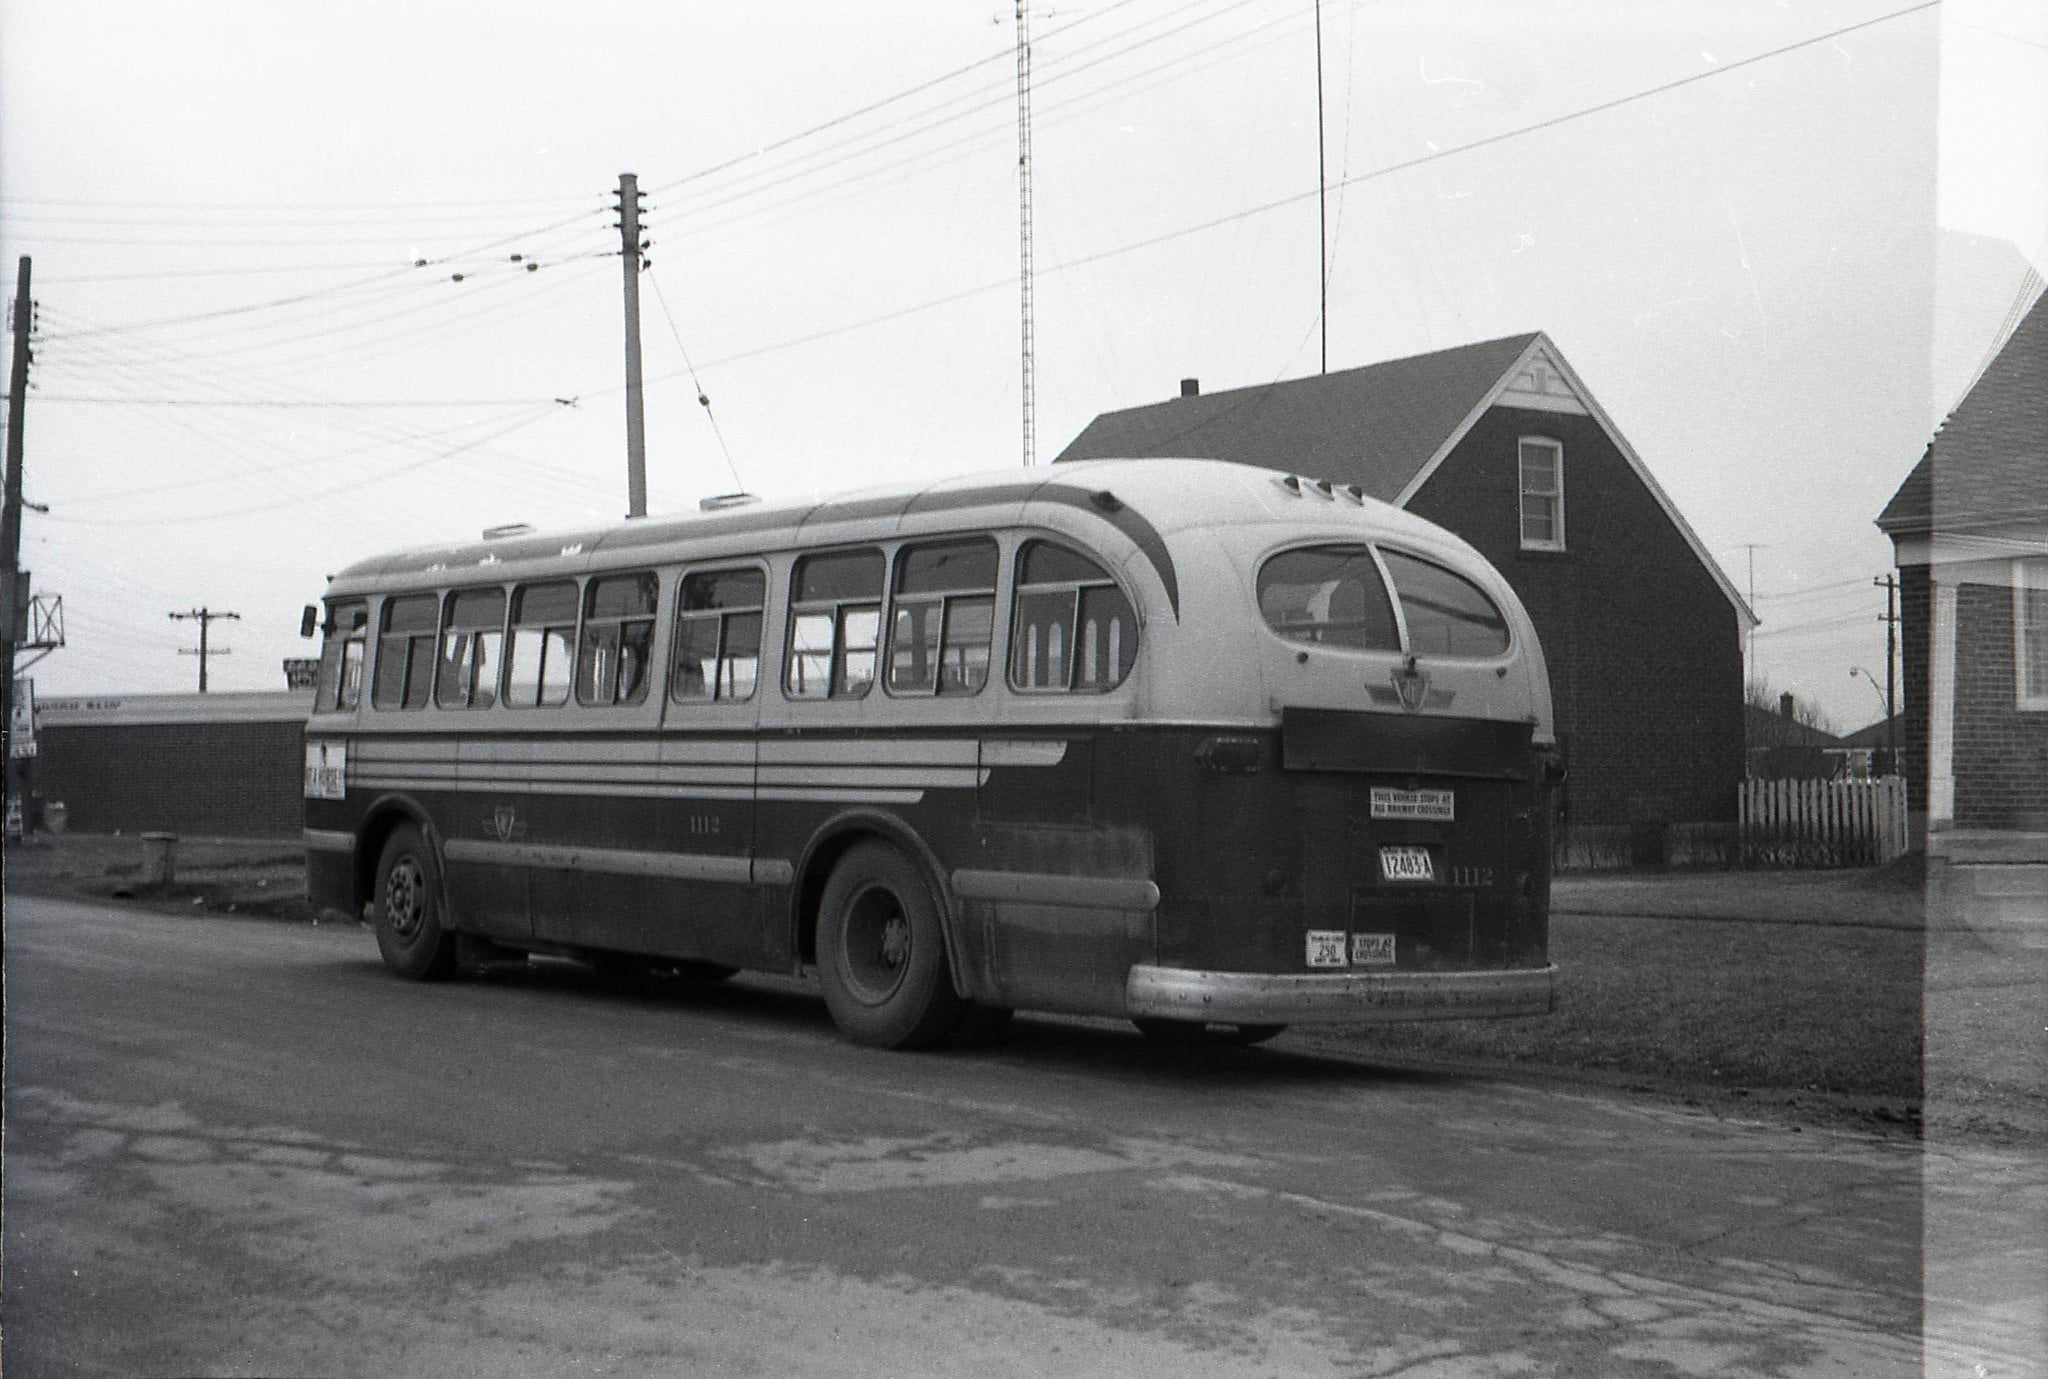 TTC Bus 1112 on Blondin, looking northwest in 1962.